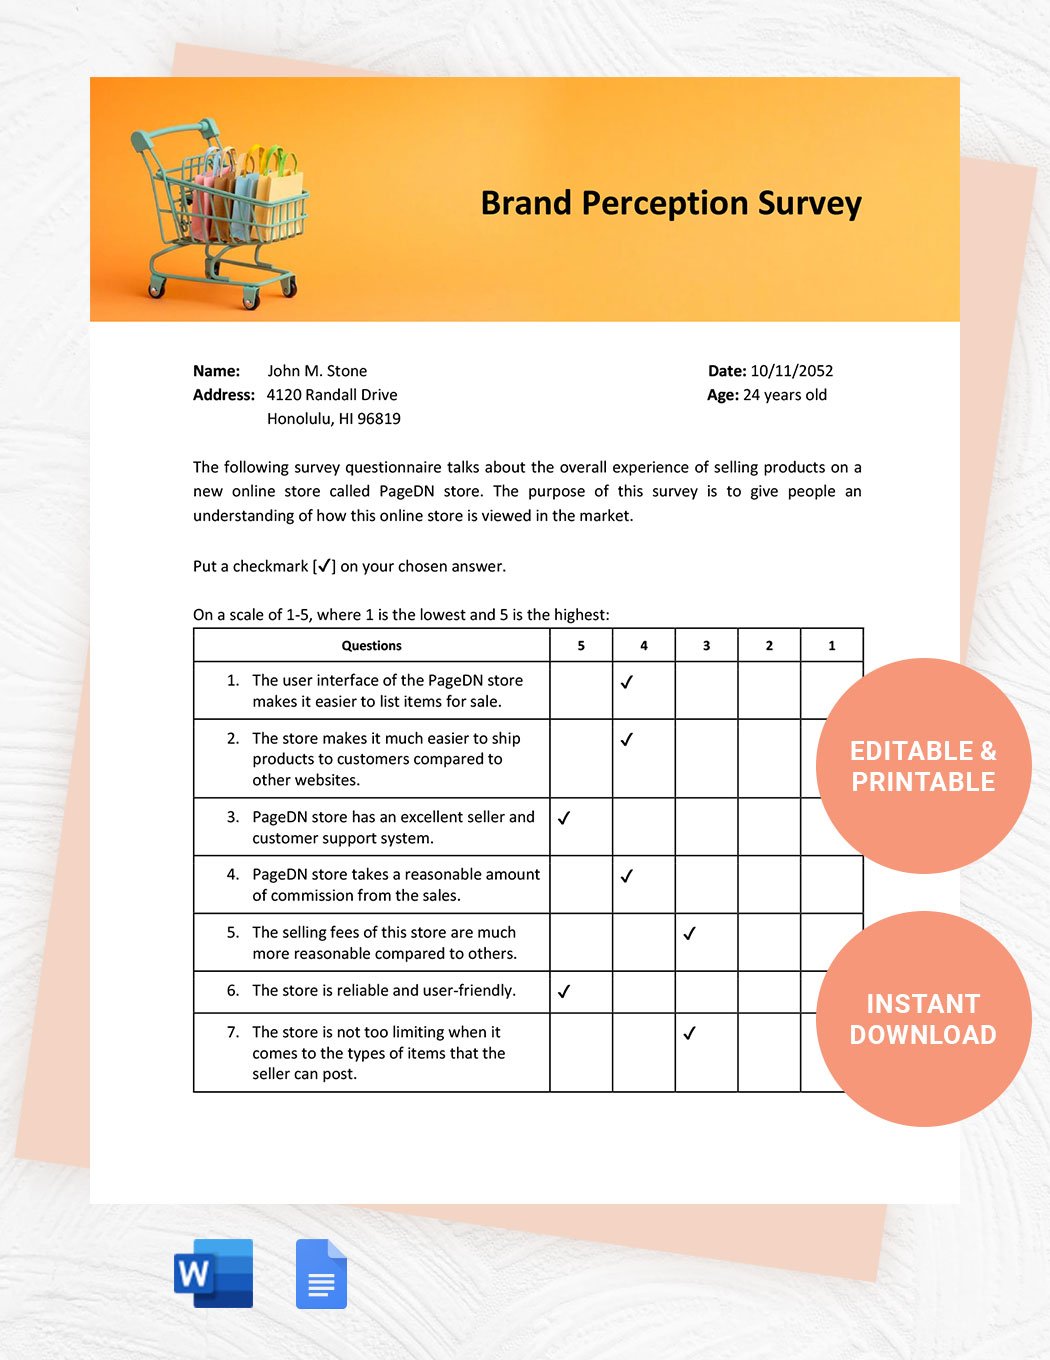 Brand Perception Survey Template in Word, Google Docs